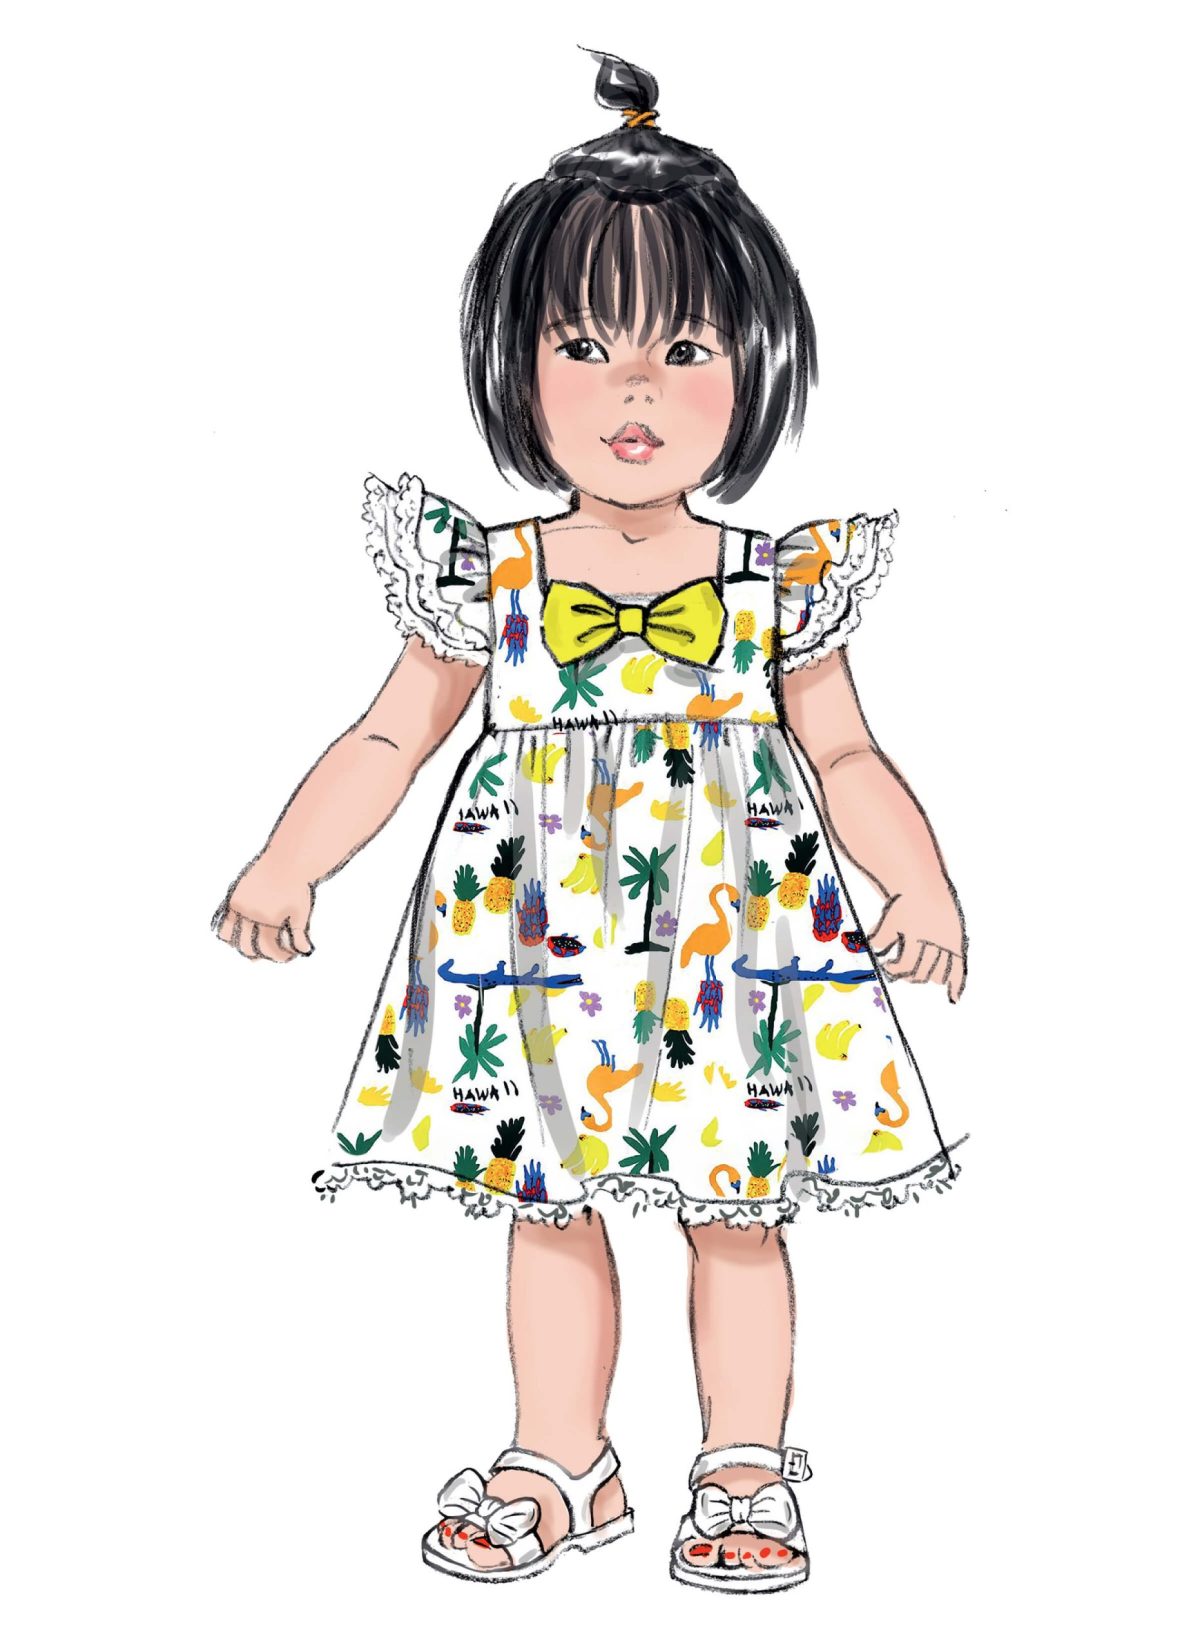 Butterick Sewing Pattern B6885 Toddlers' Dress